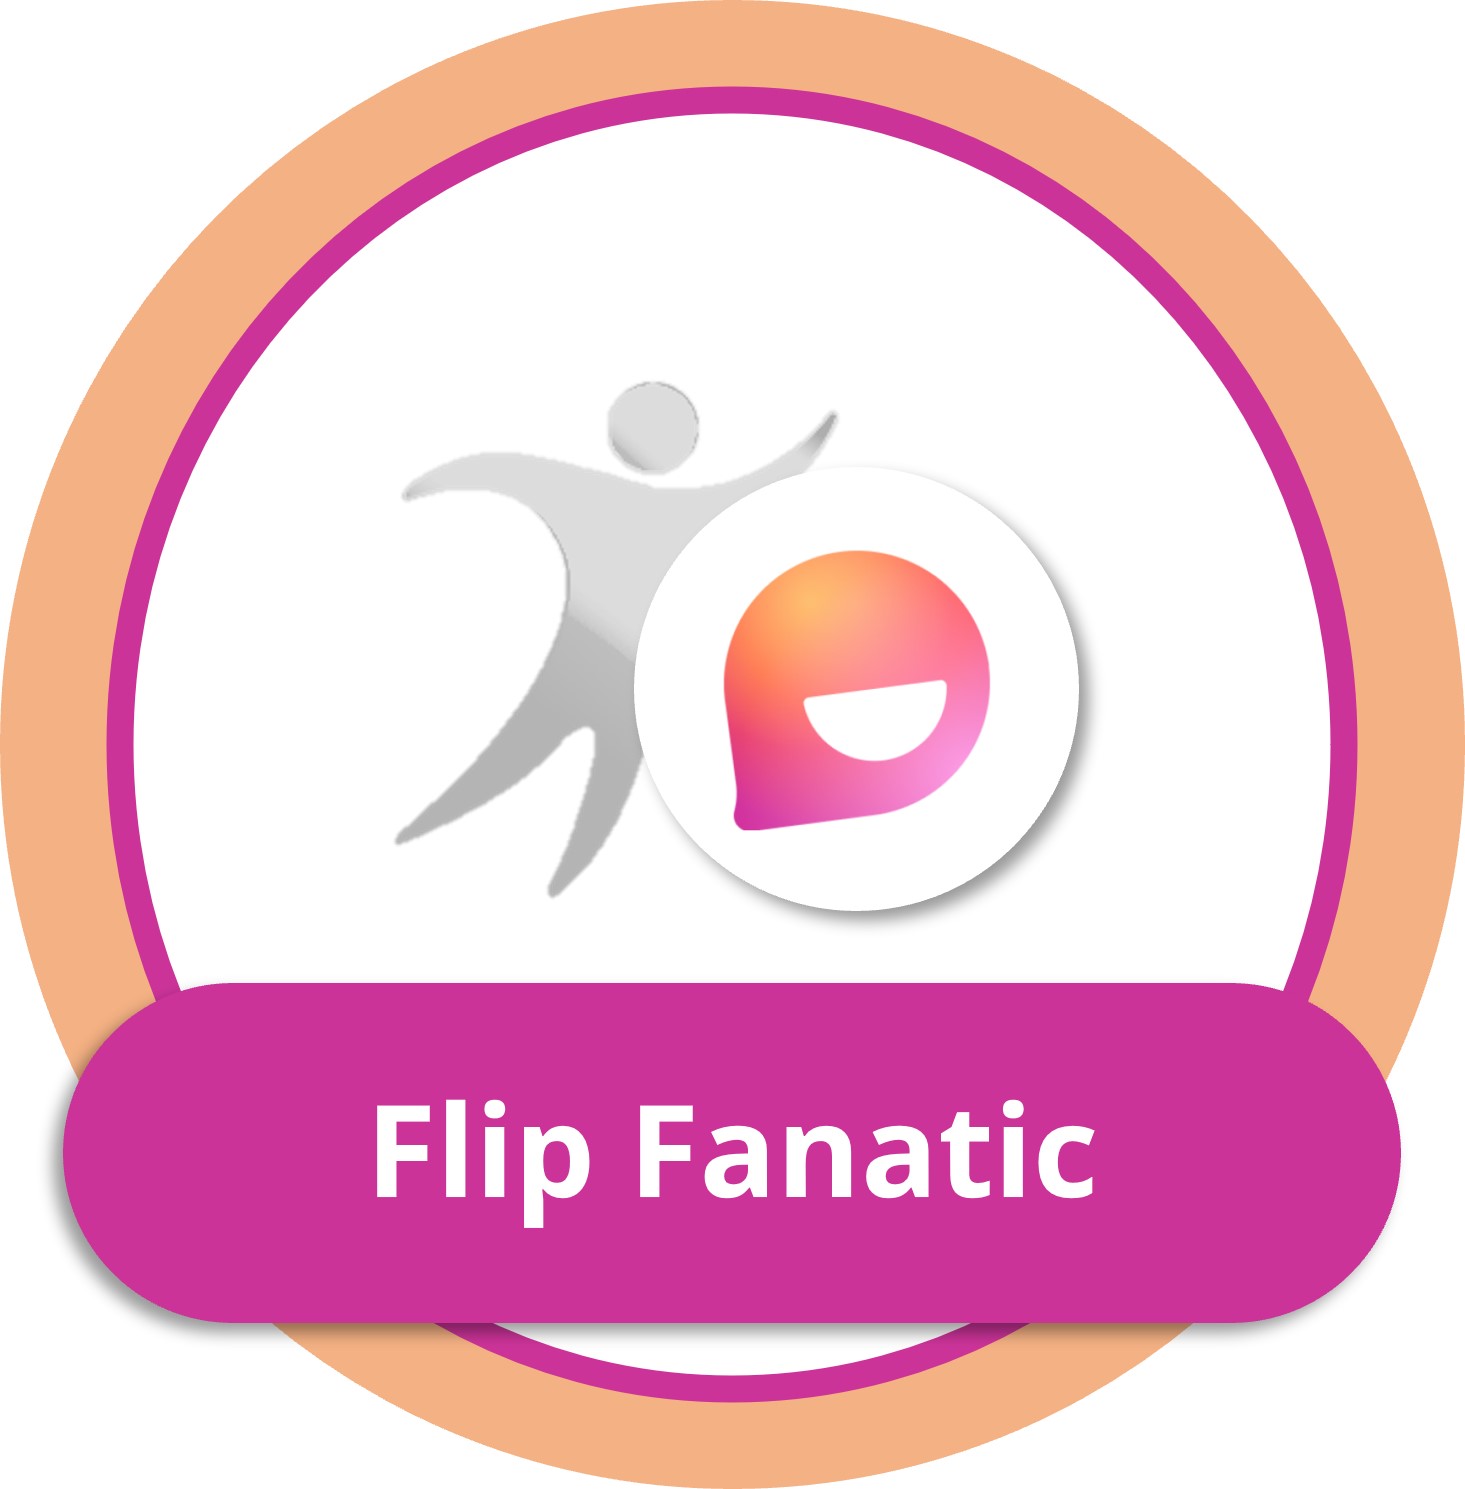 Flip fanatic